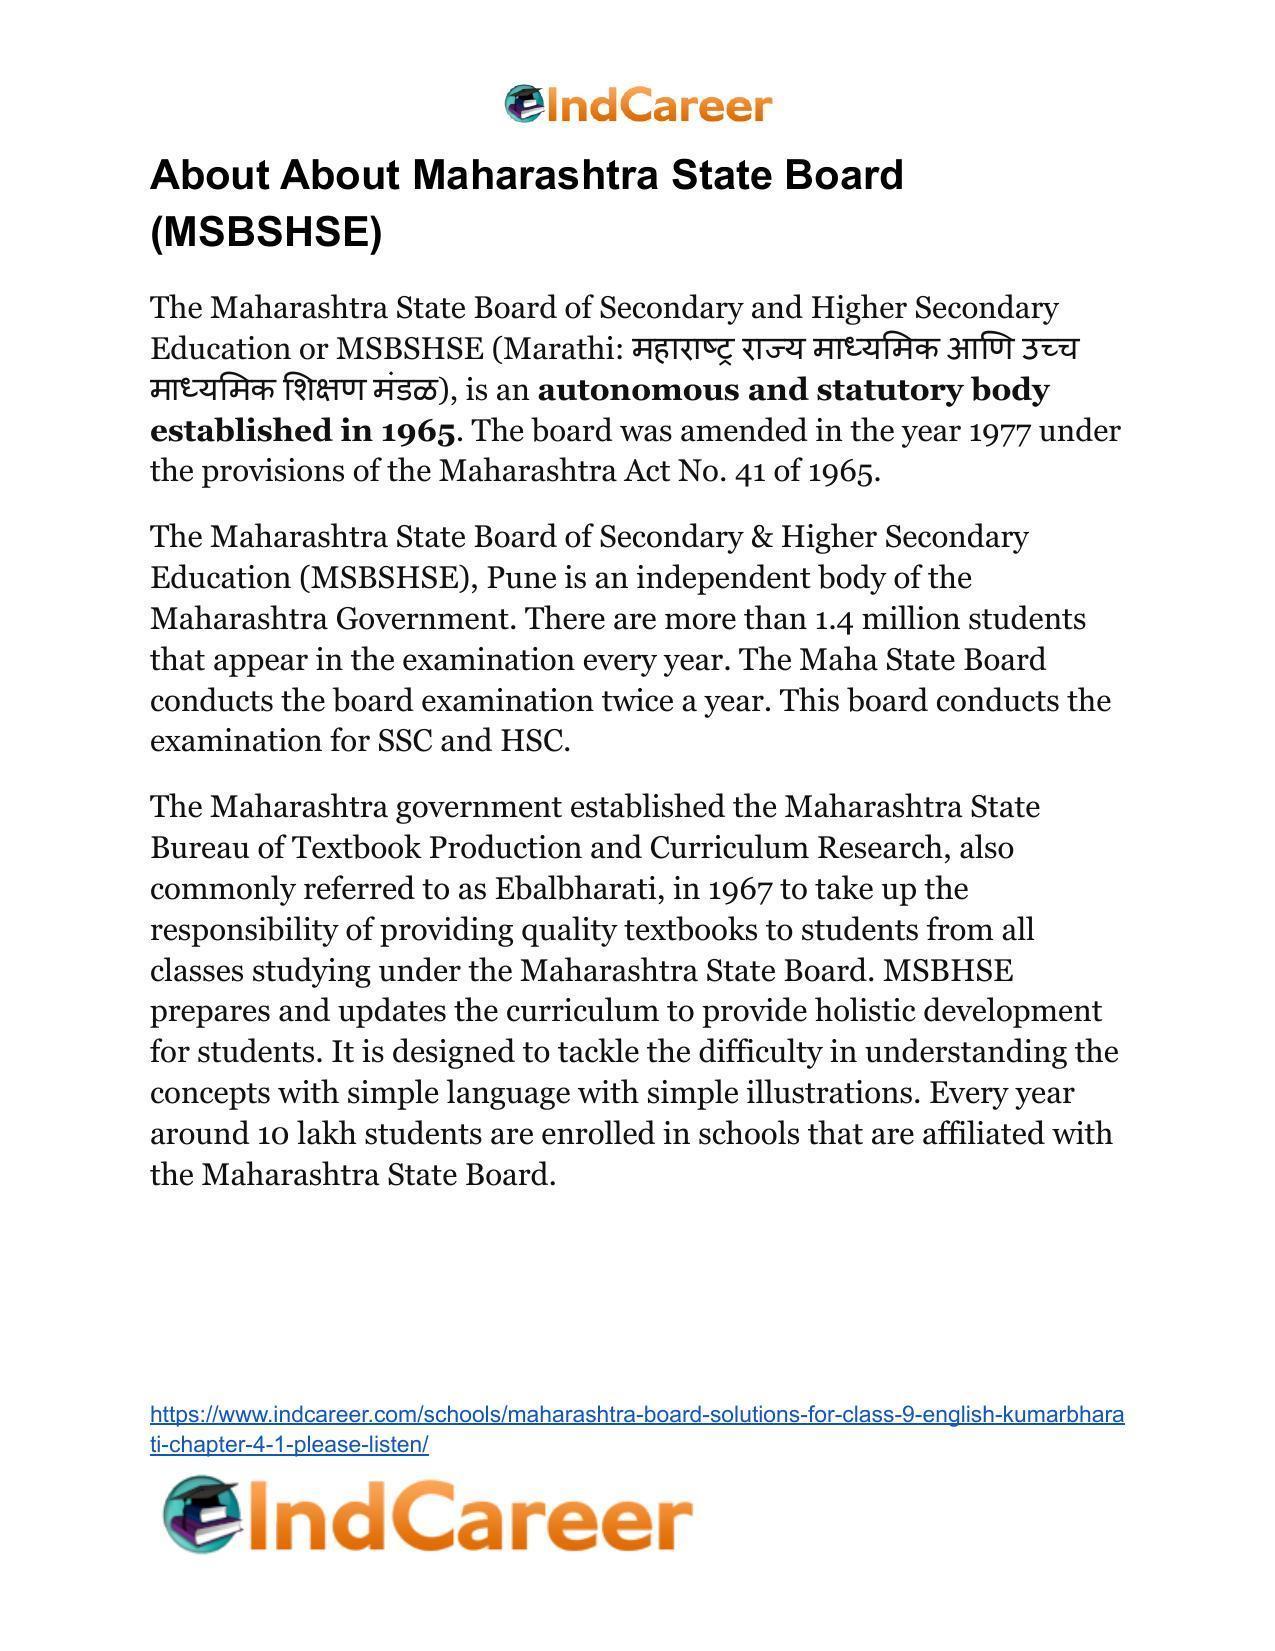 Maharashtra Board Solutions for Class 9- English Kumarbharati: Chapter 4.1- Please Listen - Page 20